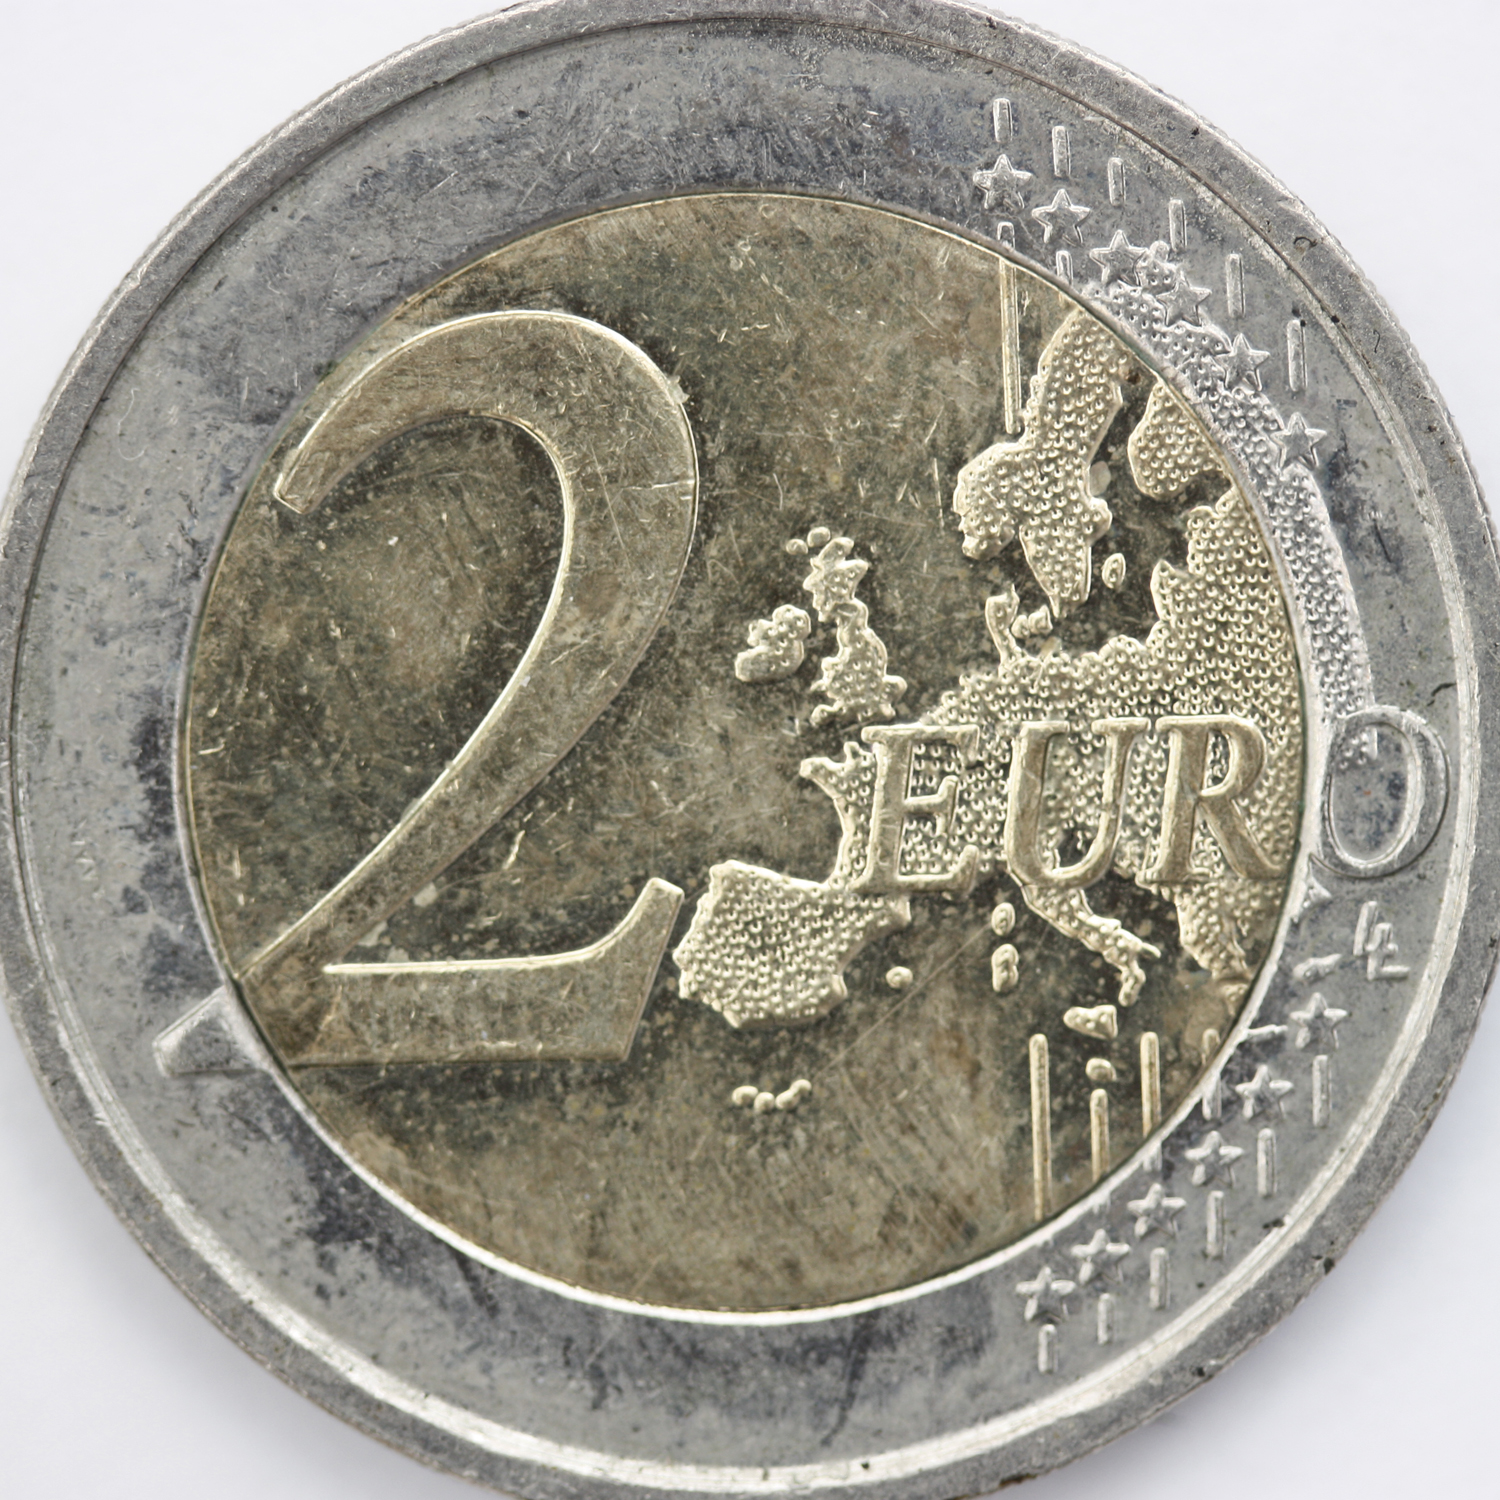 My 2 euro